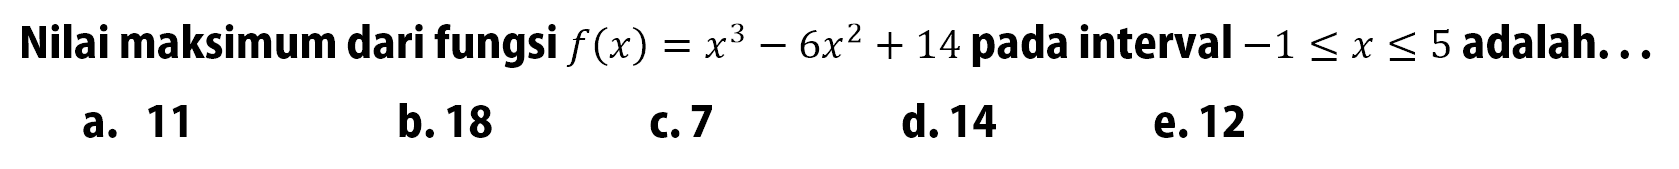 Nilai maksimum dari fungsi f(x)=x^3-6x^2+14 pada interval -1<=x<=5 adalah...